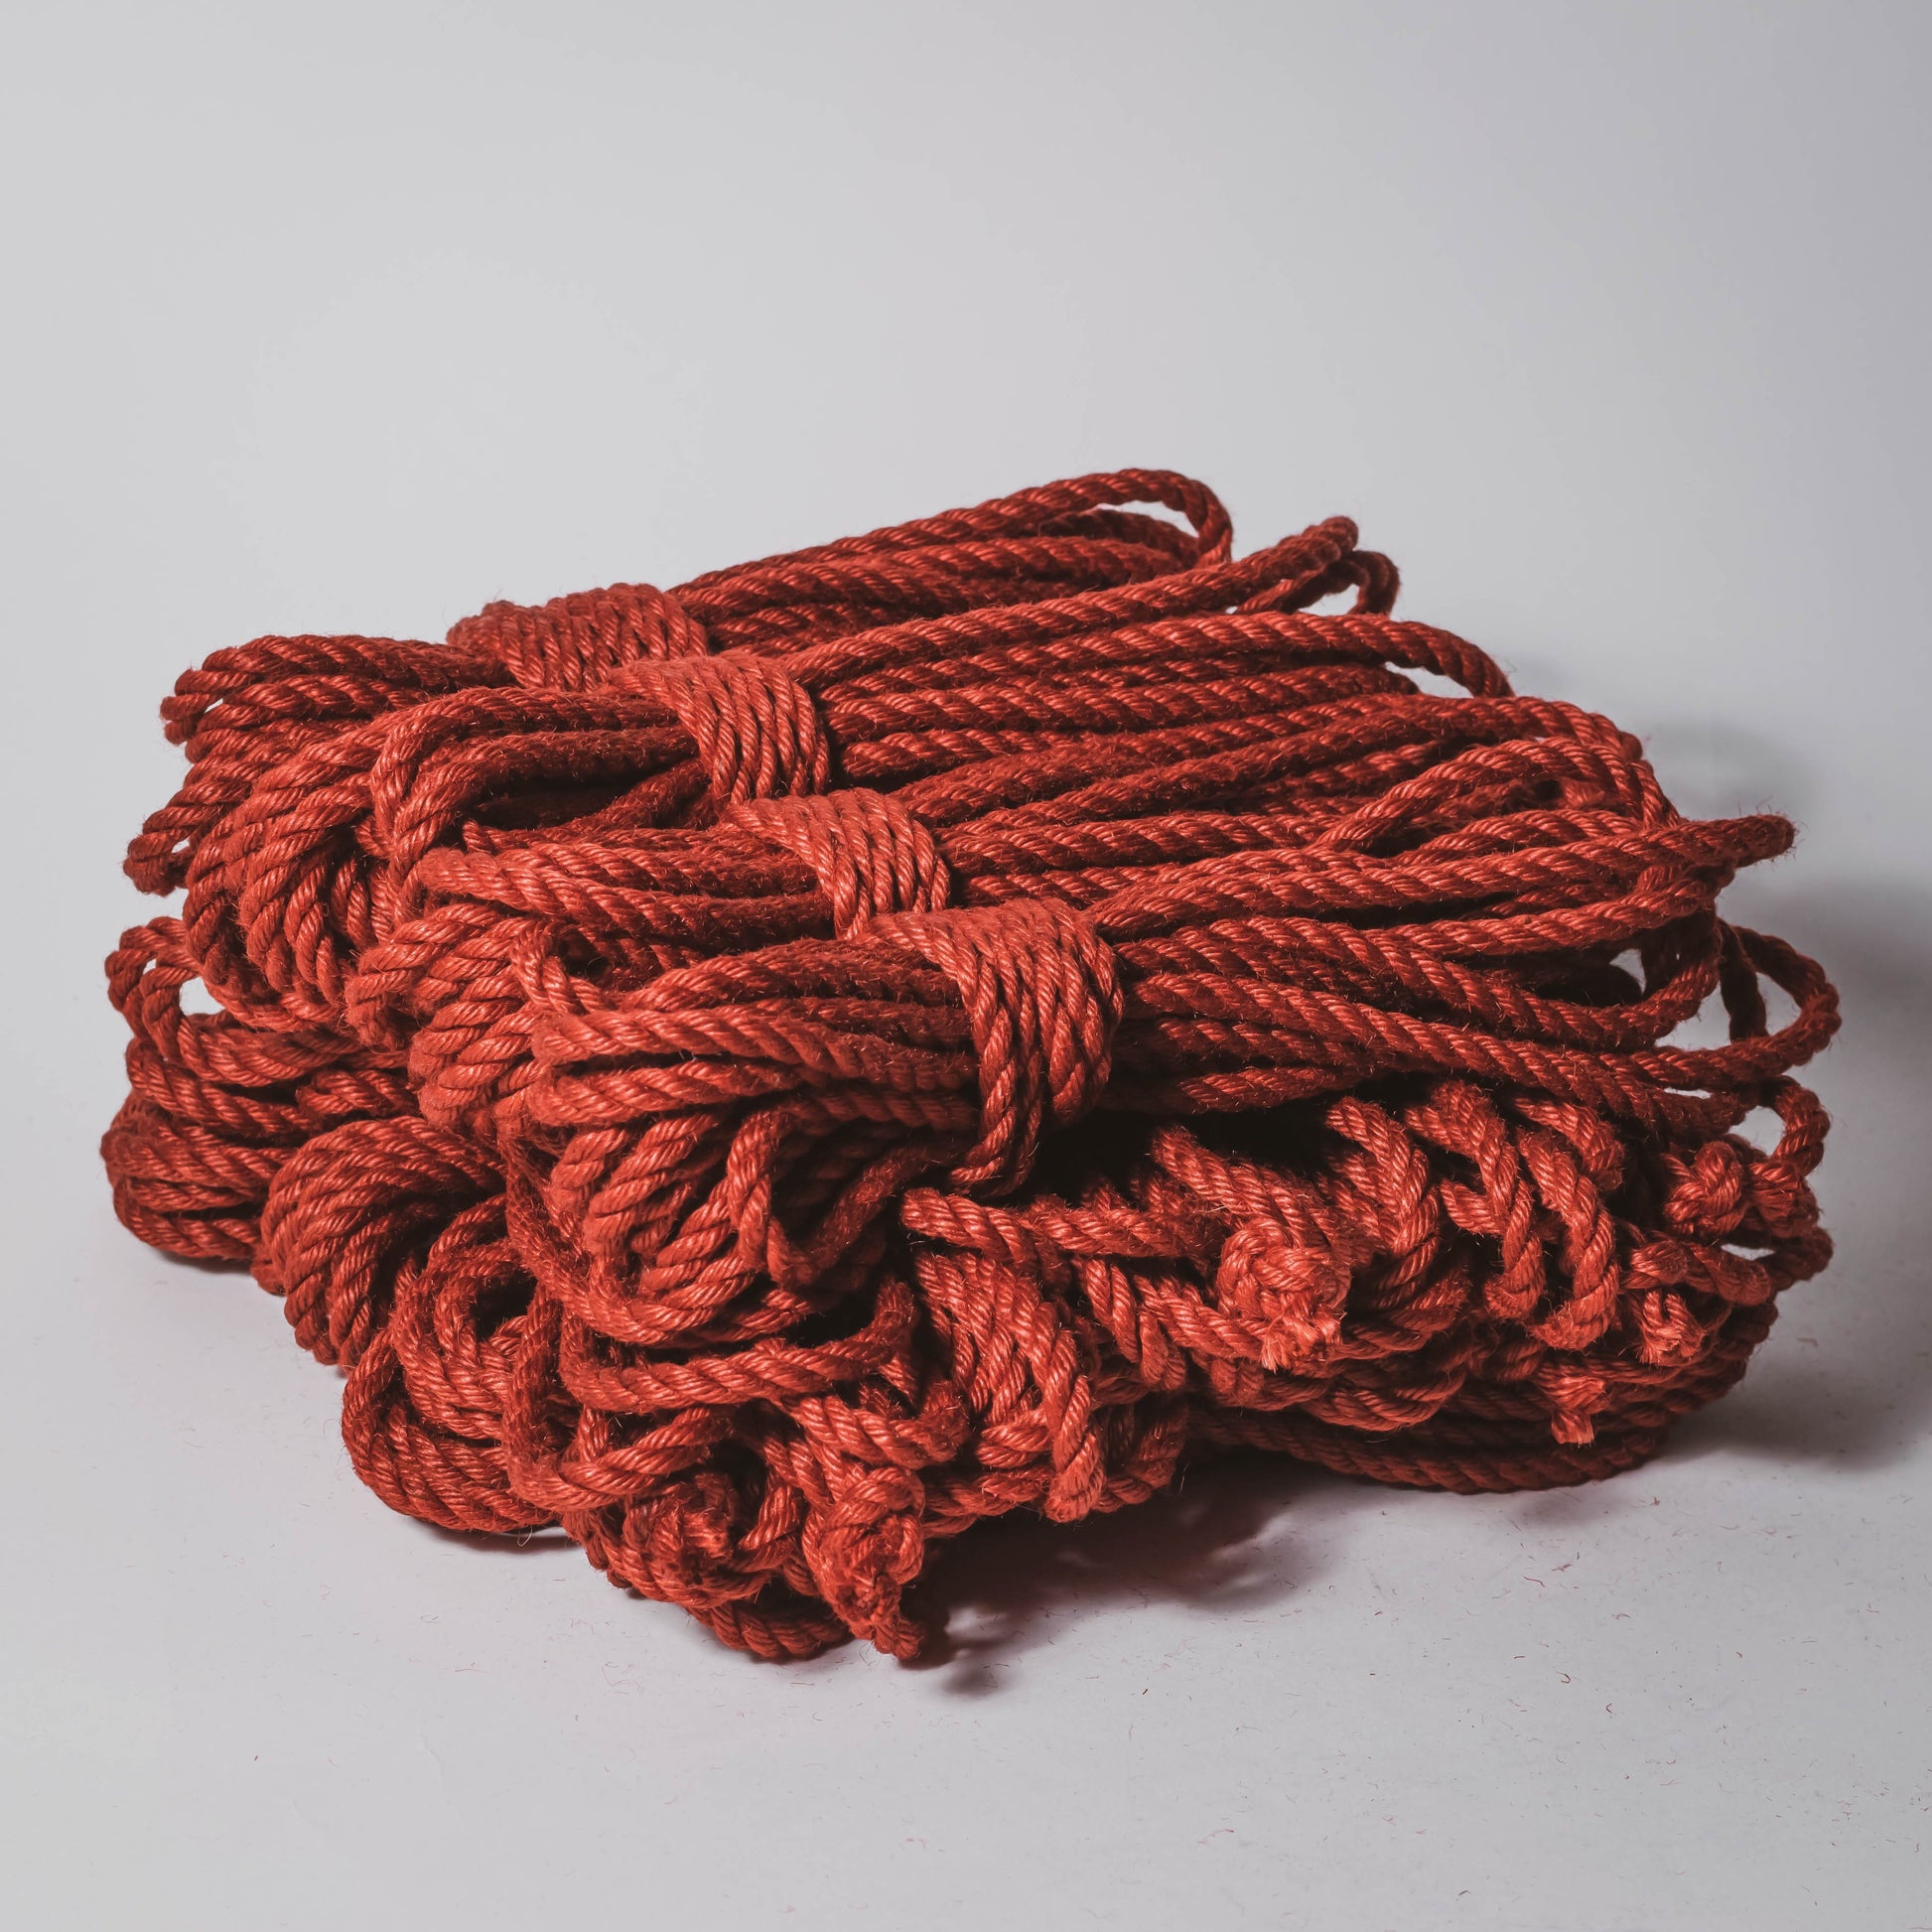 RAW AMATSUNAWA 6/0 premium quality jute rope for your tying